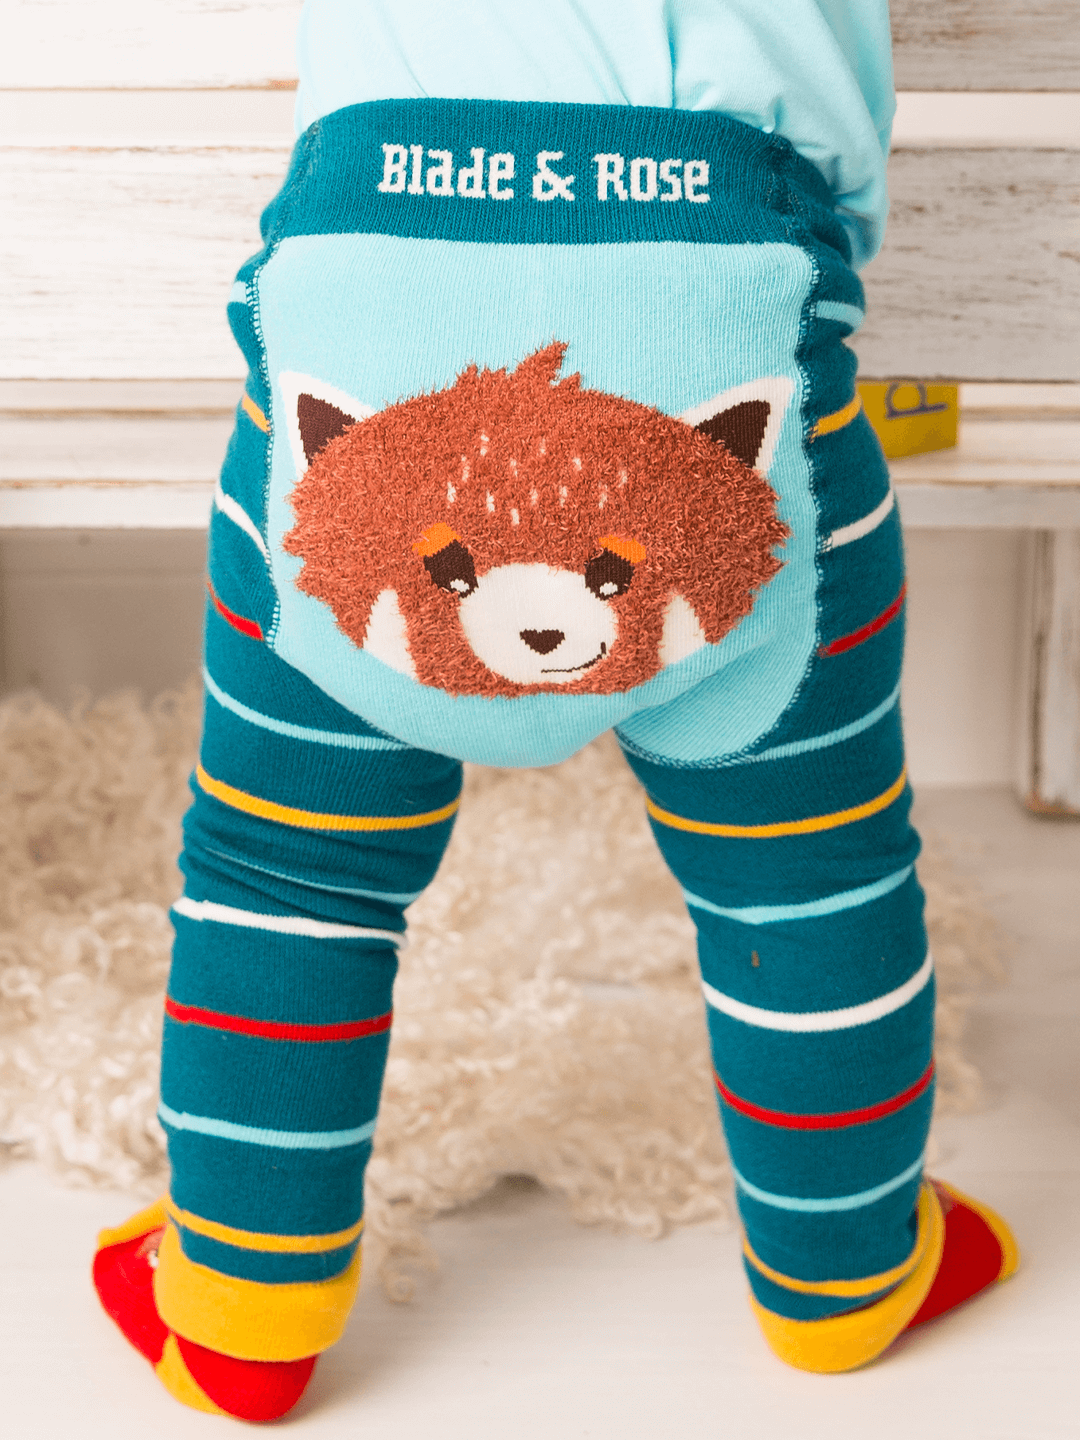 Blade & Rose - Llama Leggings  Children's Clothing Ireland – Summer Sweets  Baby